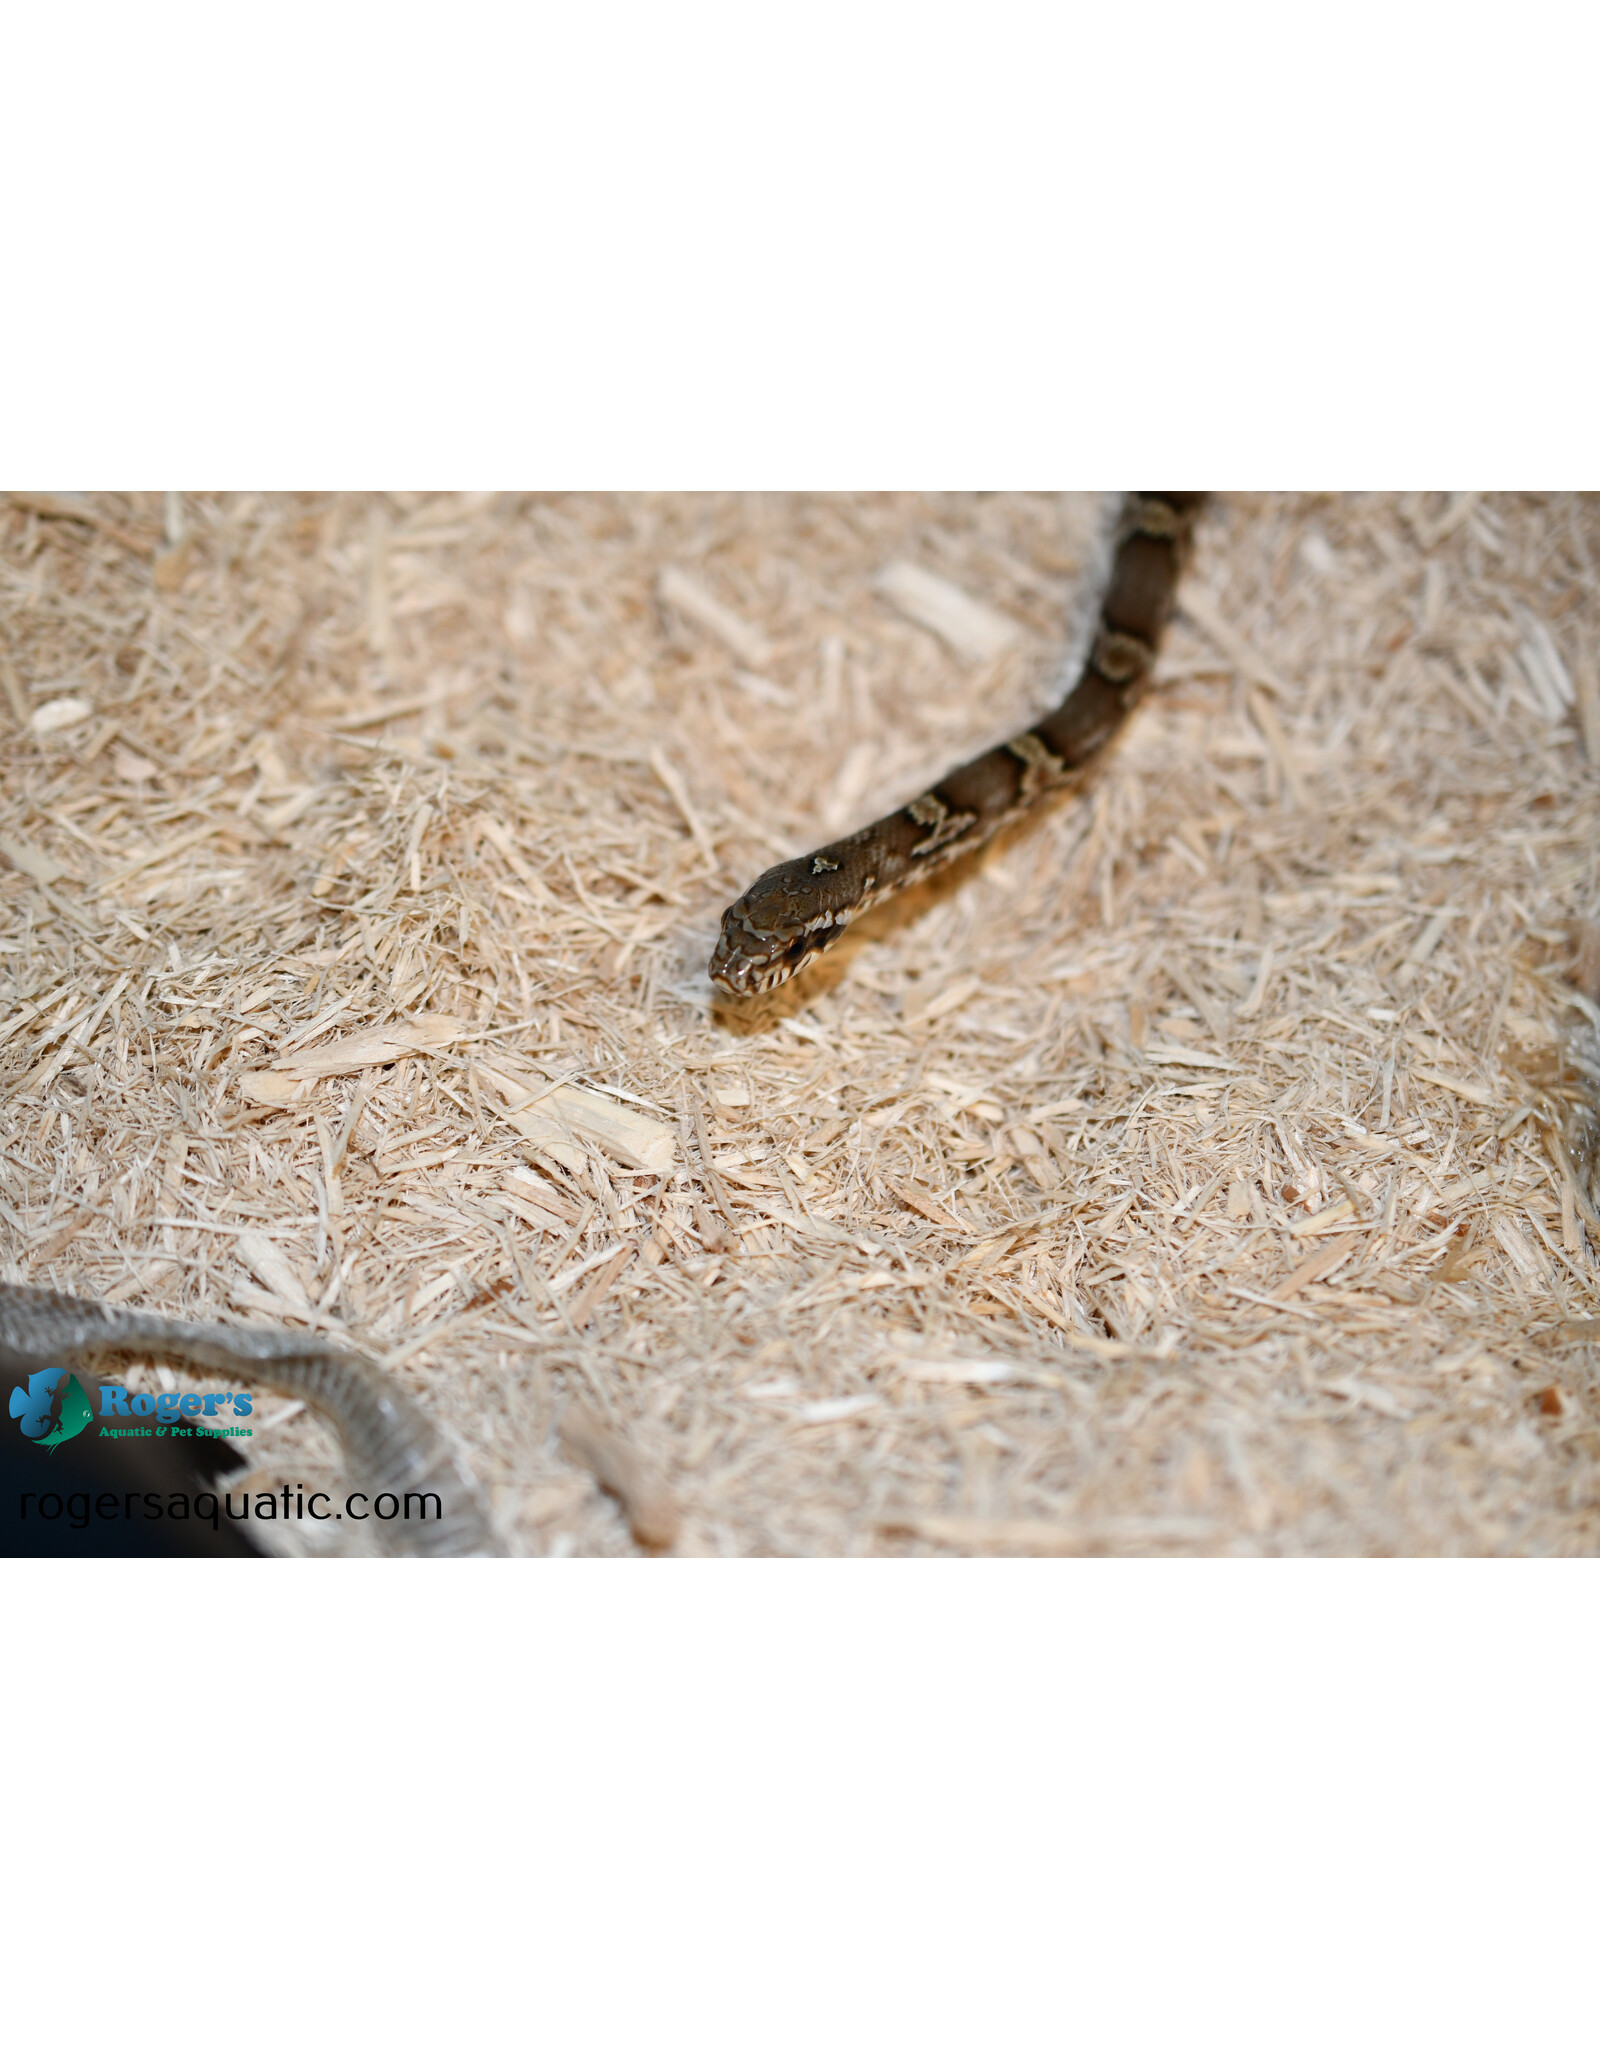 Roger's Aquatics Korean Rat Snake - Elaphe anomala - Female - Hatched Spring '23